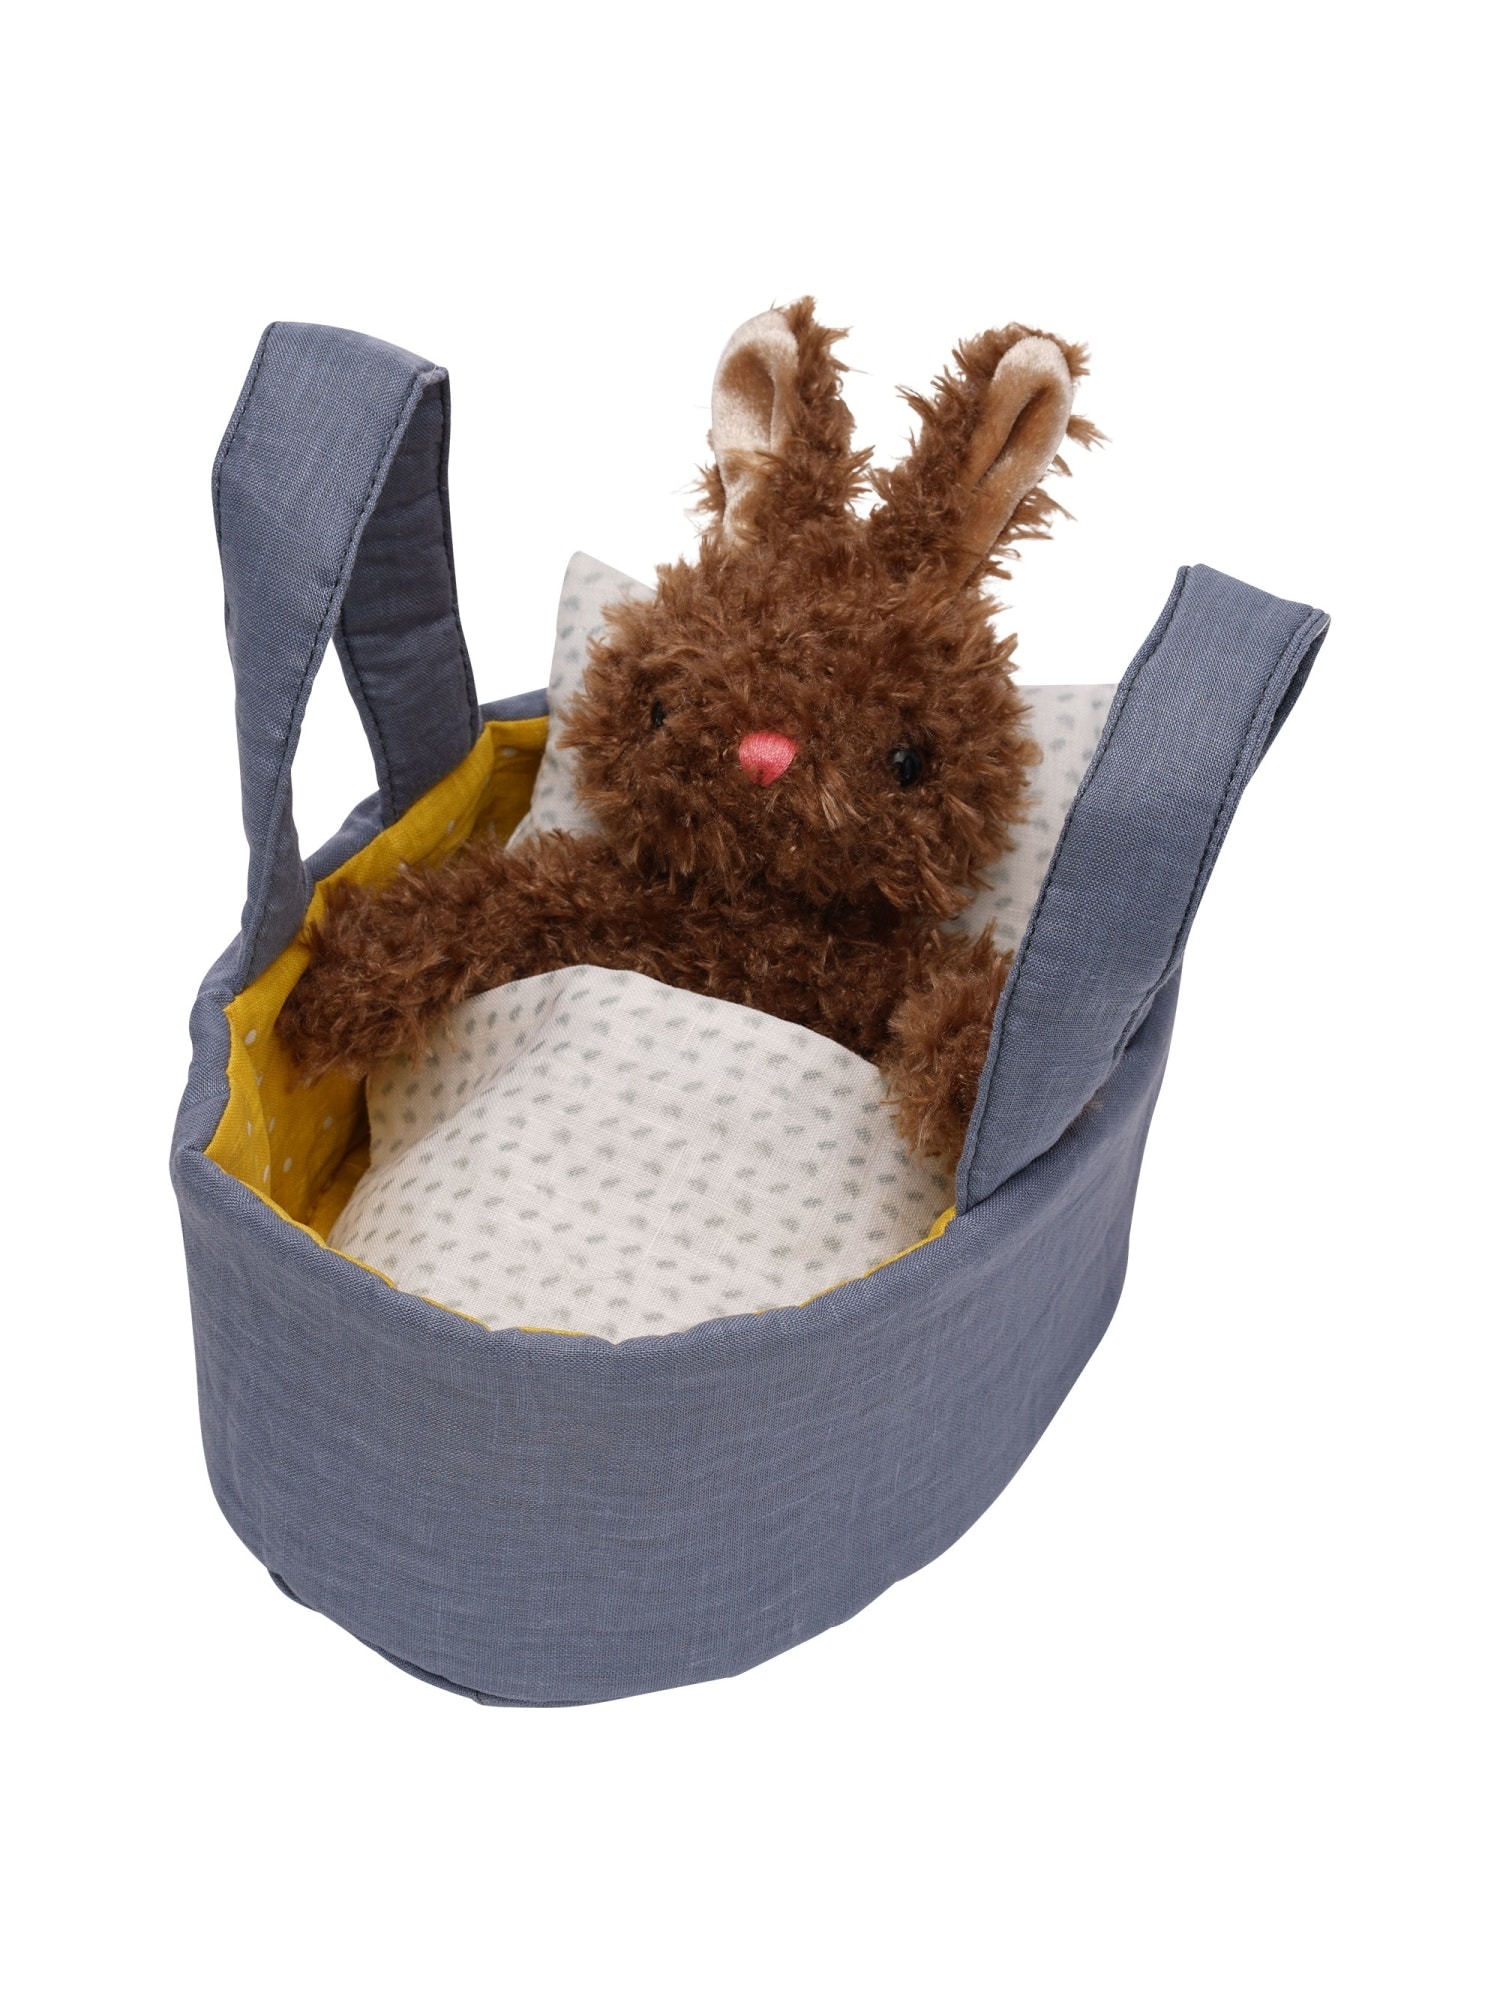 Gap Moppettes Beau Bunny Stuffed Animal Bassinet and Pillow